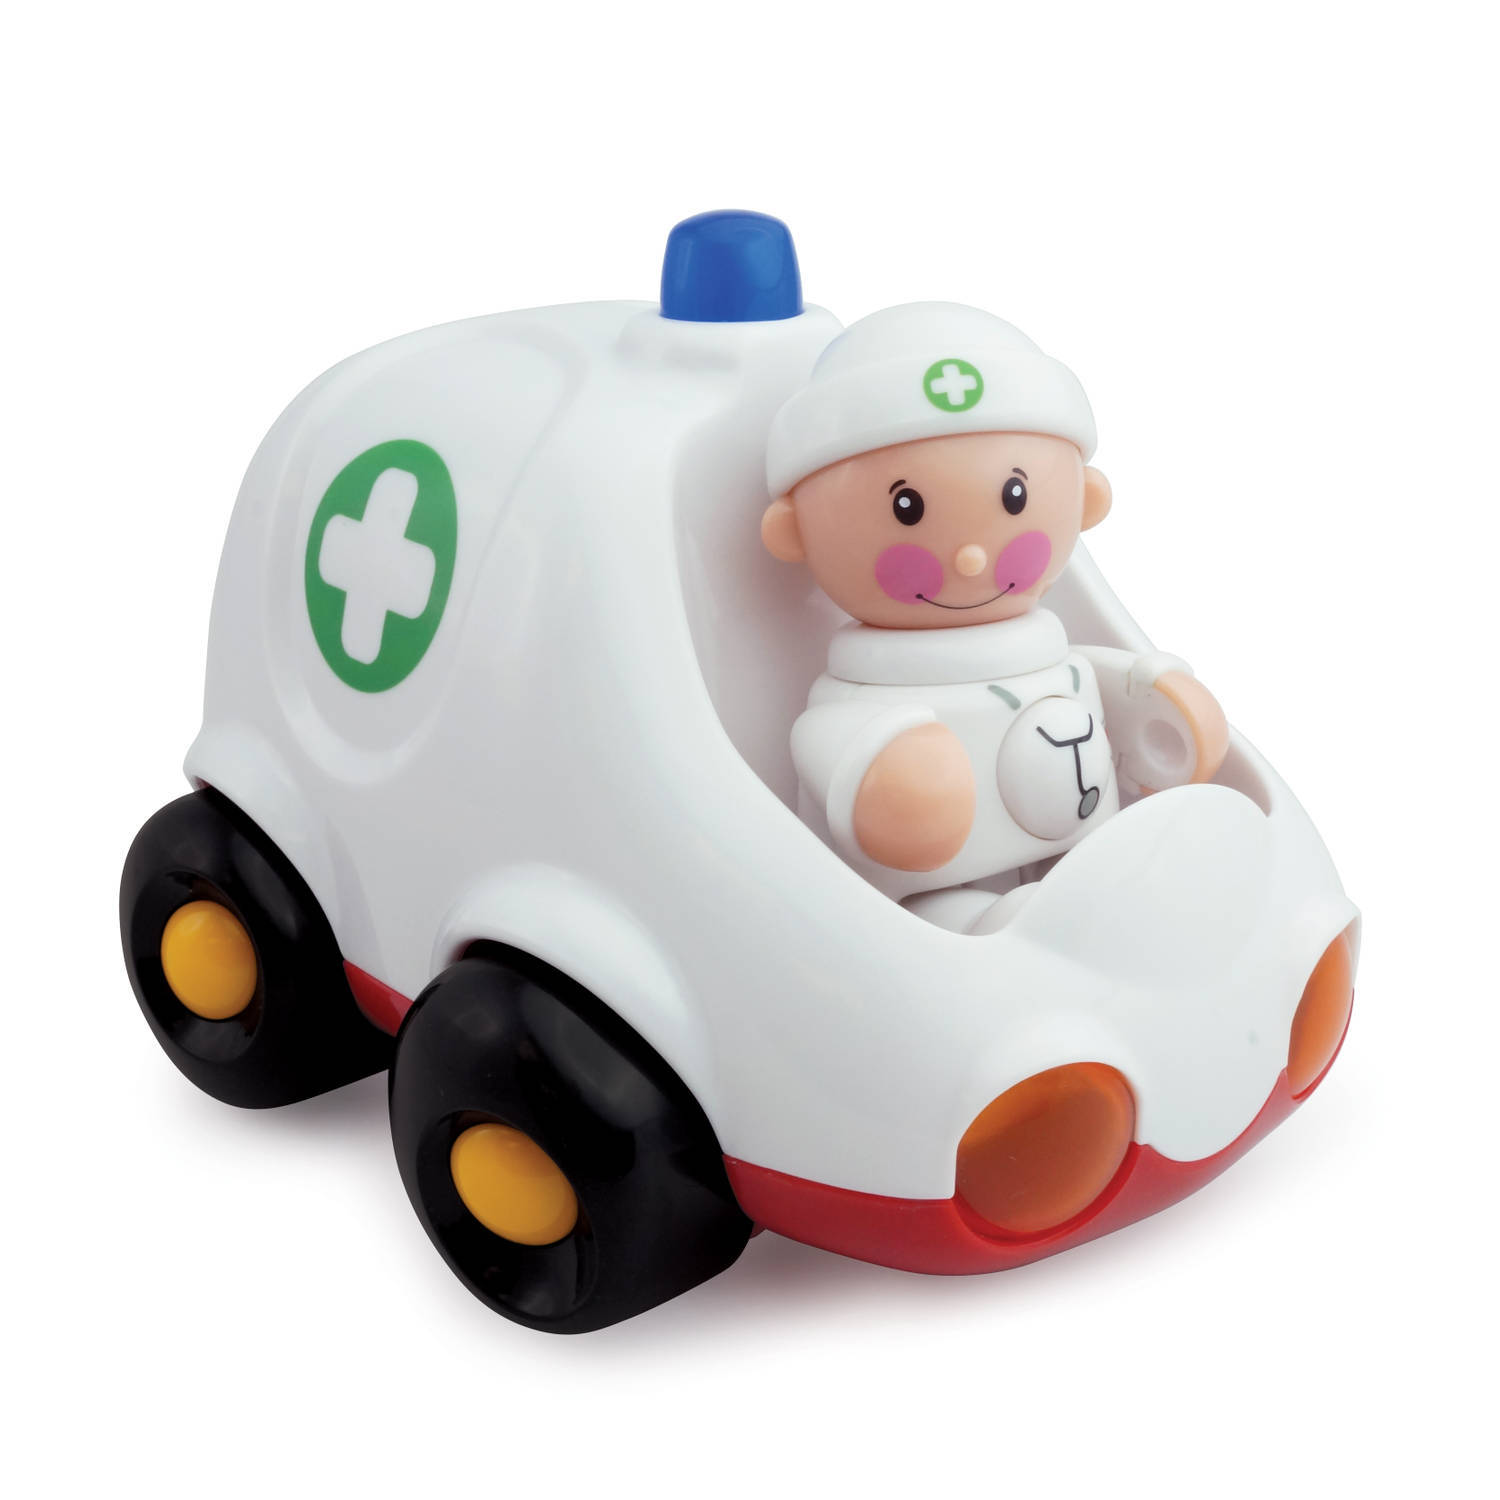 Tolo First Friends Speelgoedvoertuig - Ambulance